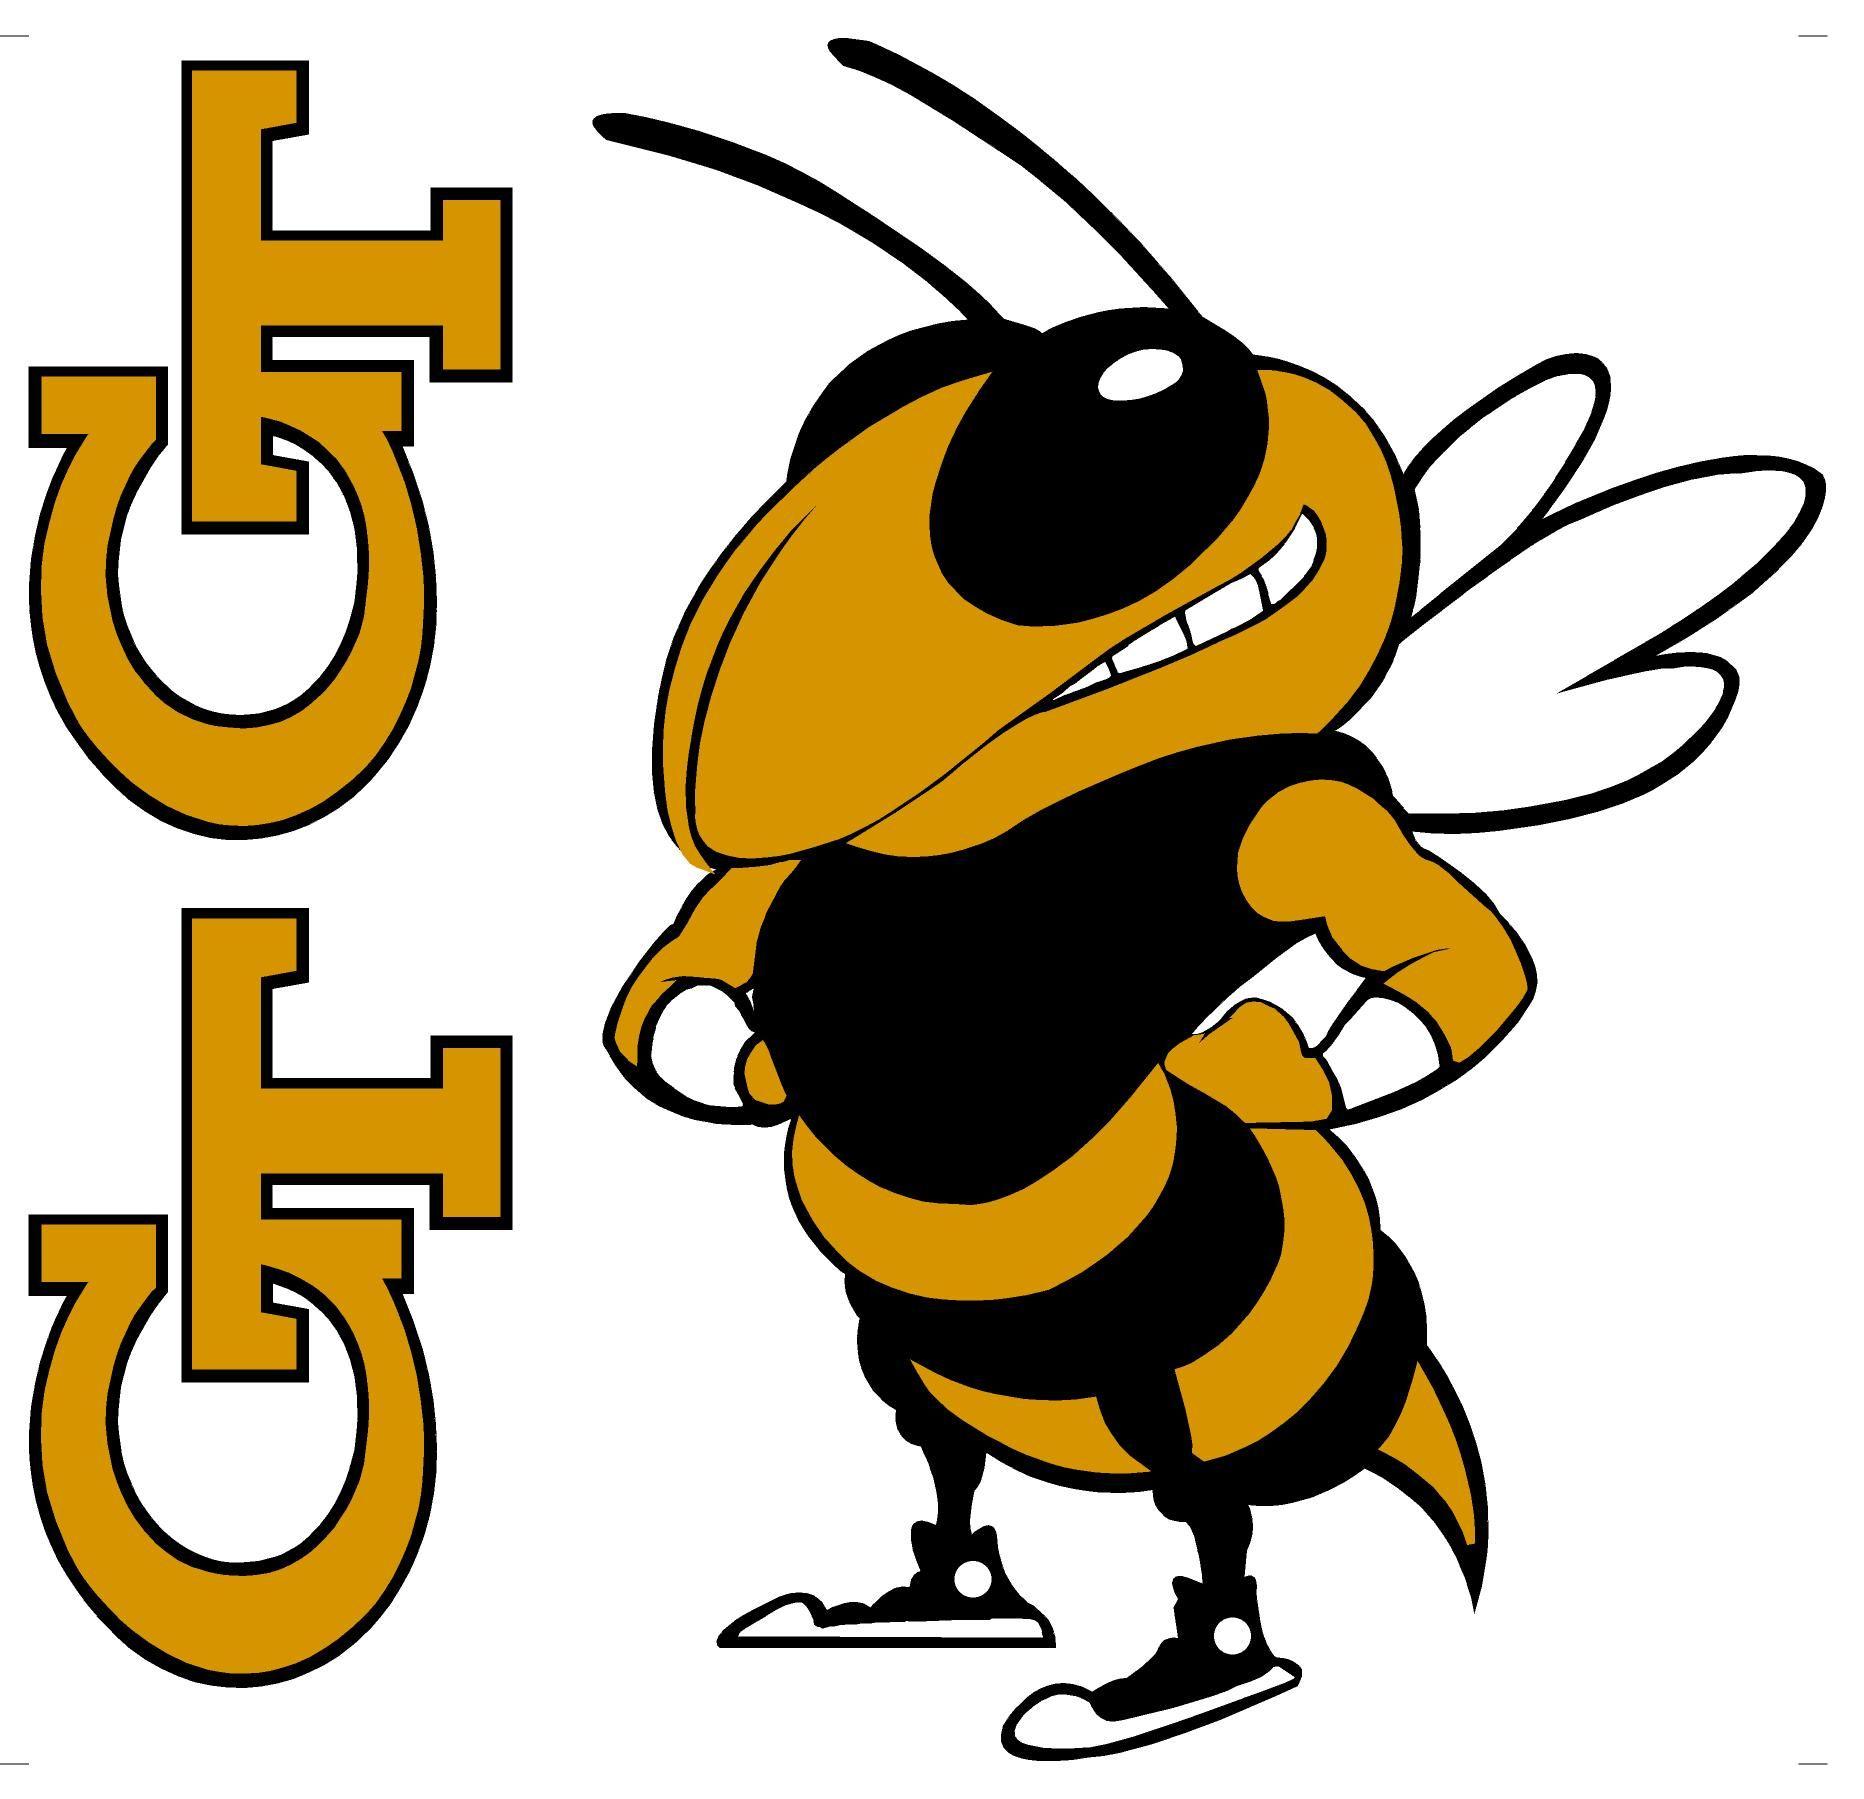 Yellow Jacket Sports Logo - 17 Georgia Tech Yellow Jackets — Sports strategy, analysis, and a ...